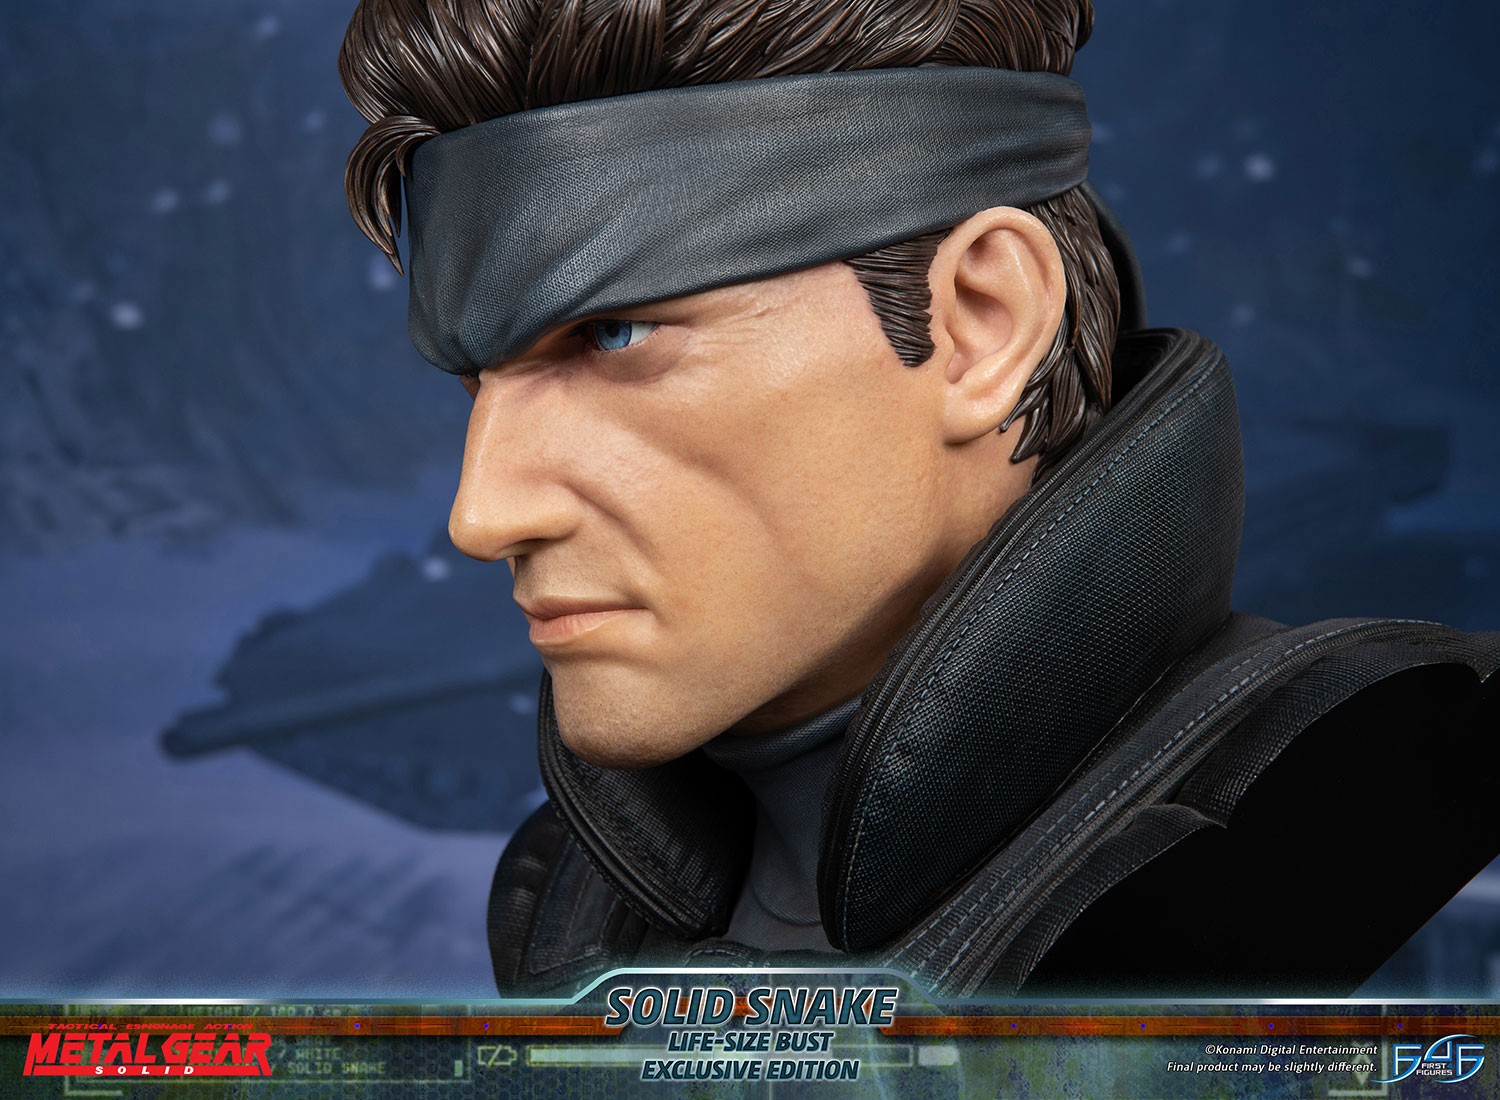 Snake? Snake! It's A Metal Gear Solid Snake Bust!